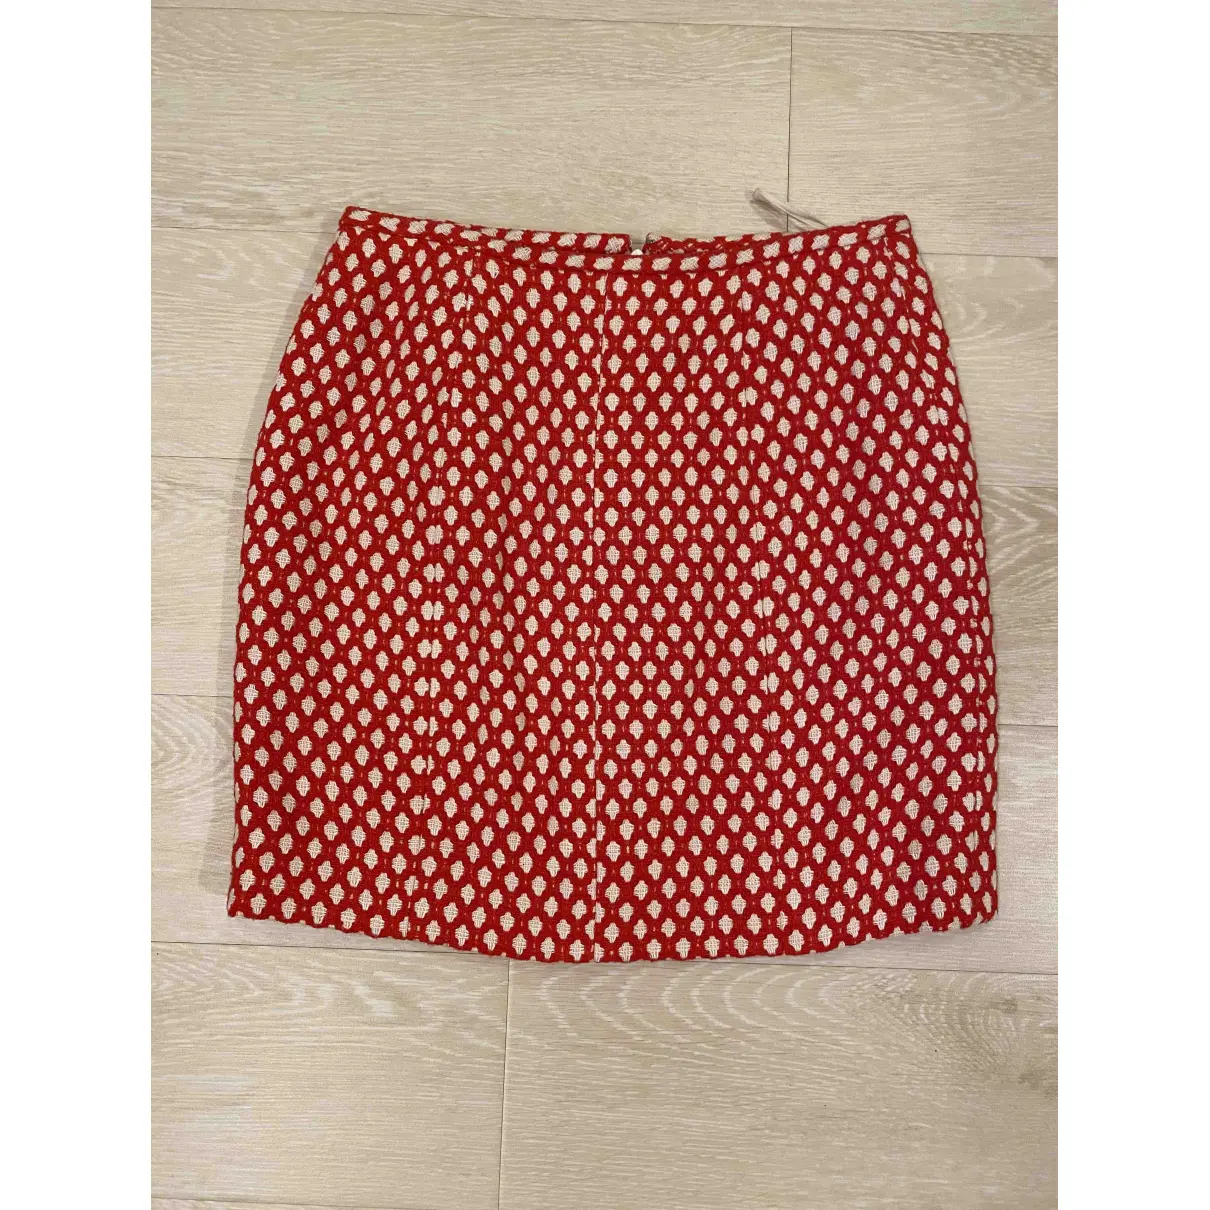 Buy Chanel Skirt suit online